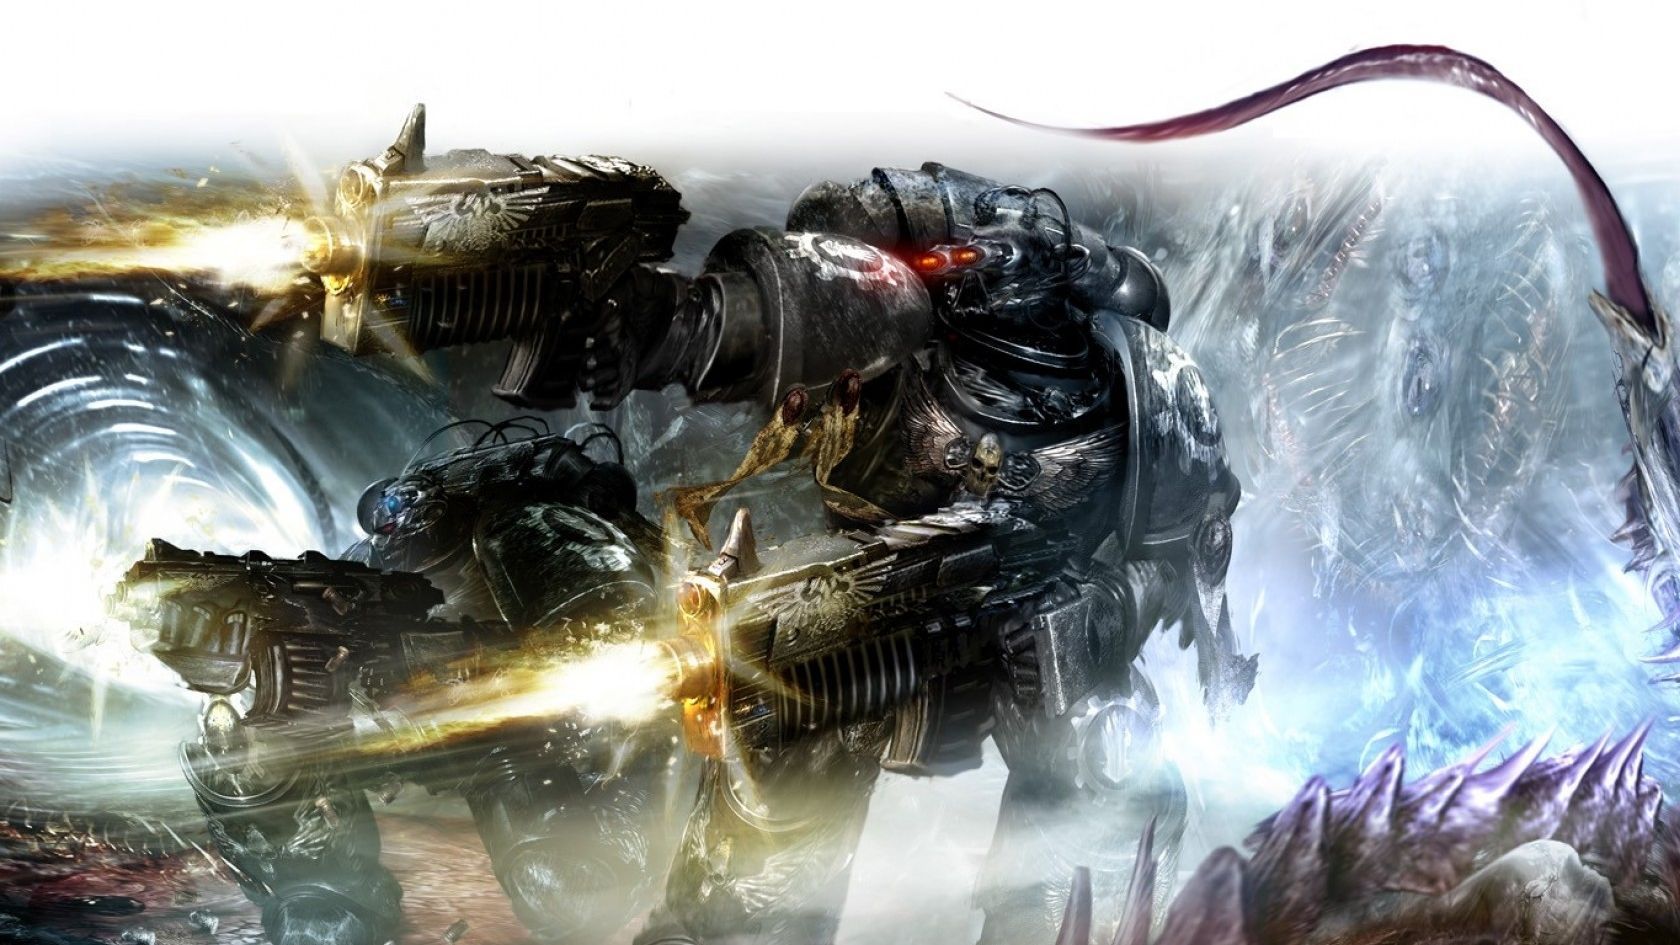 101 Warhammer 40K HD Wallpapers | Backgrounds - Wallpaper Abyss ...